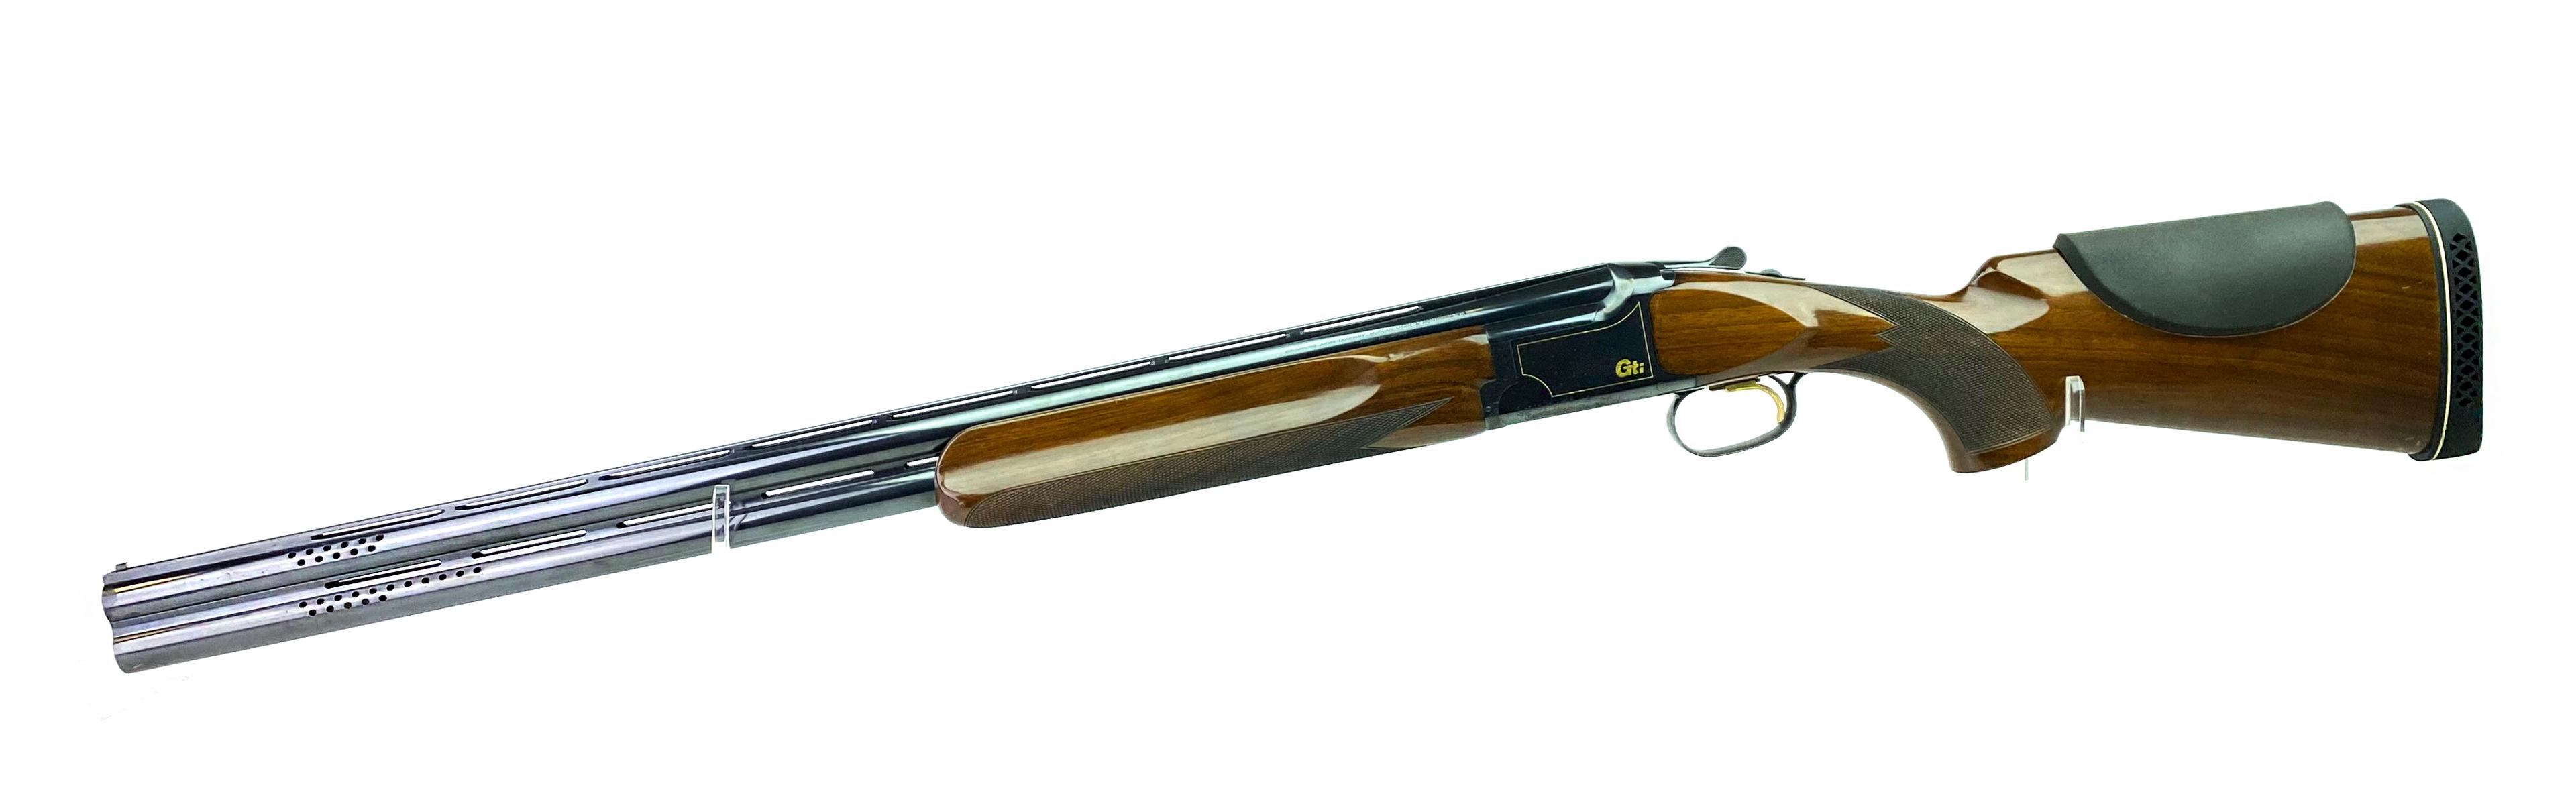 Excellent Browning Citori Gti 12 GA. O/U Vent Rib Ported Double Barrel Shotgun